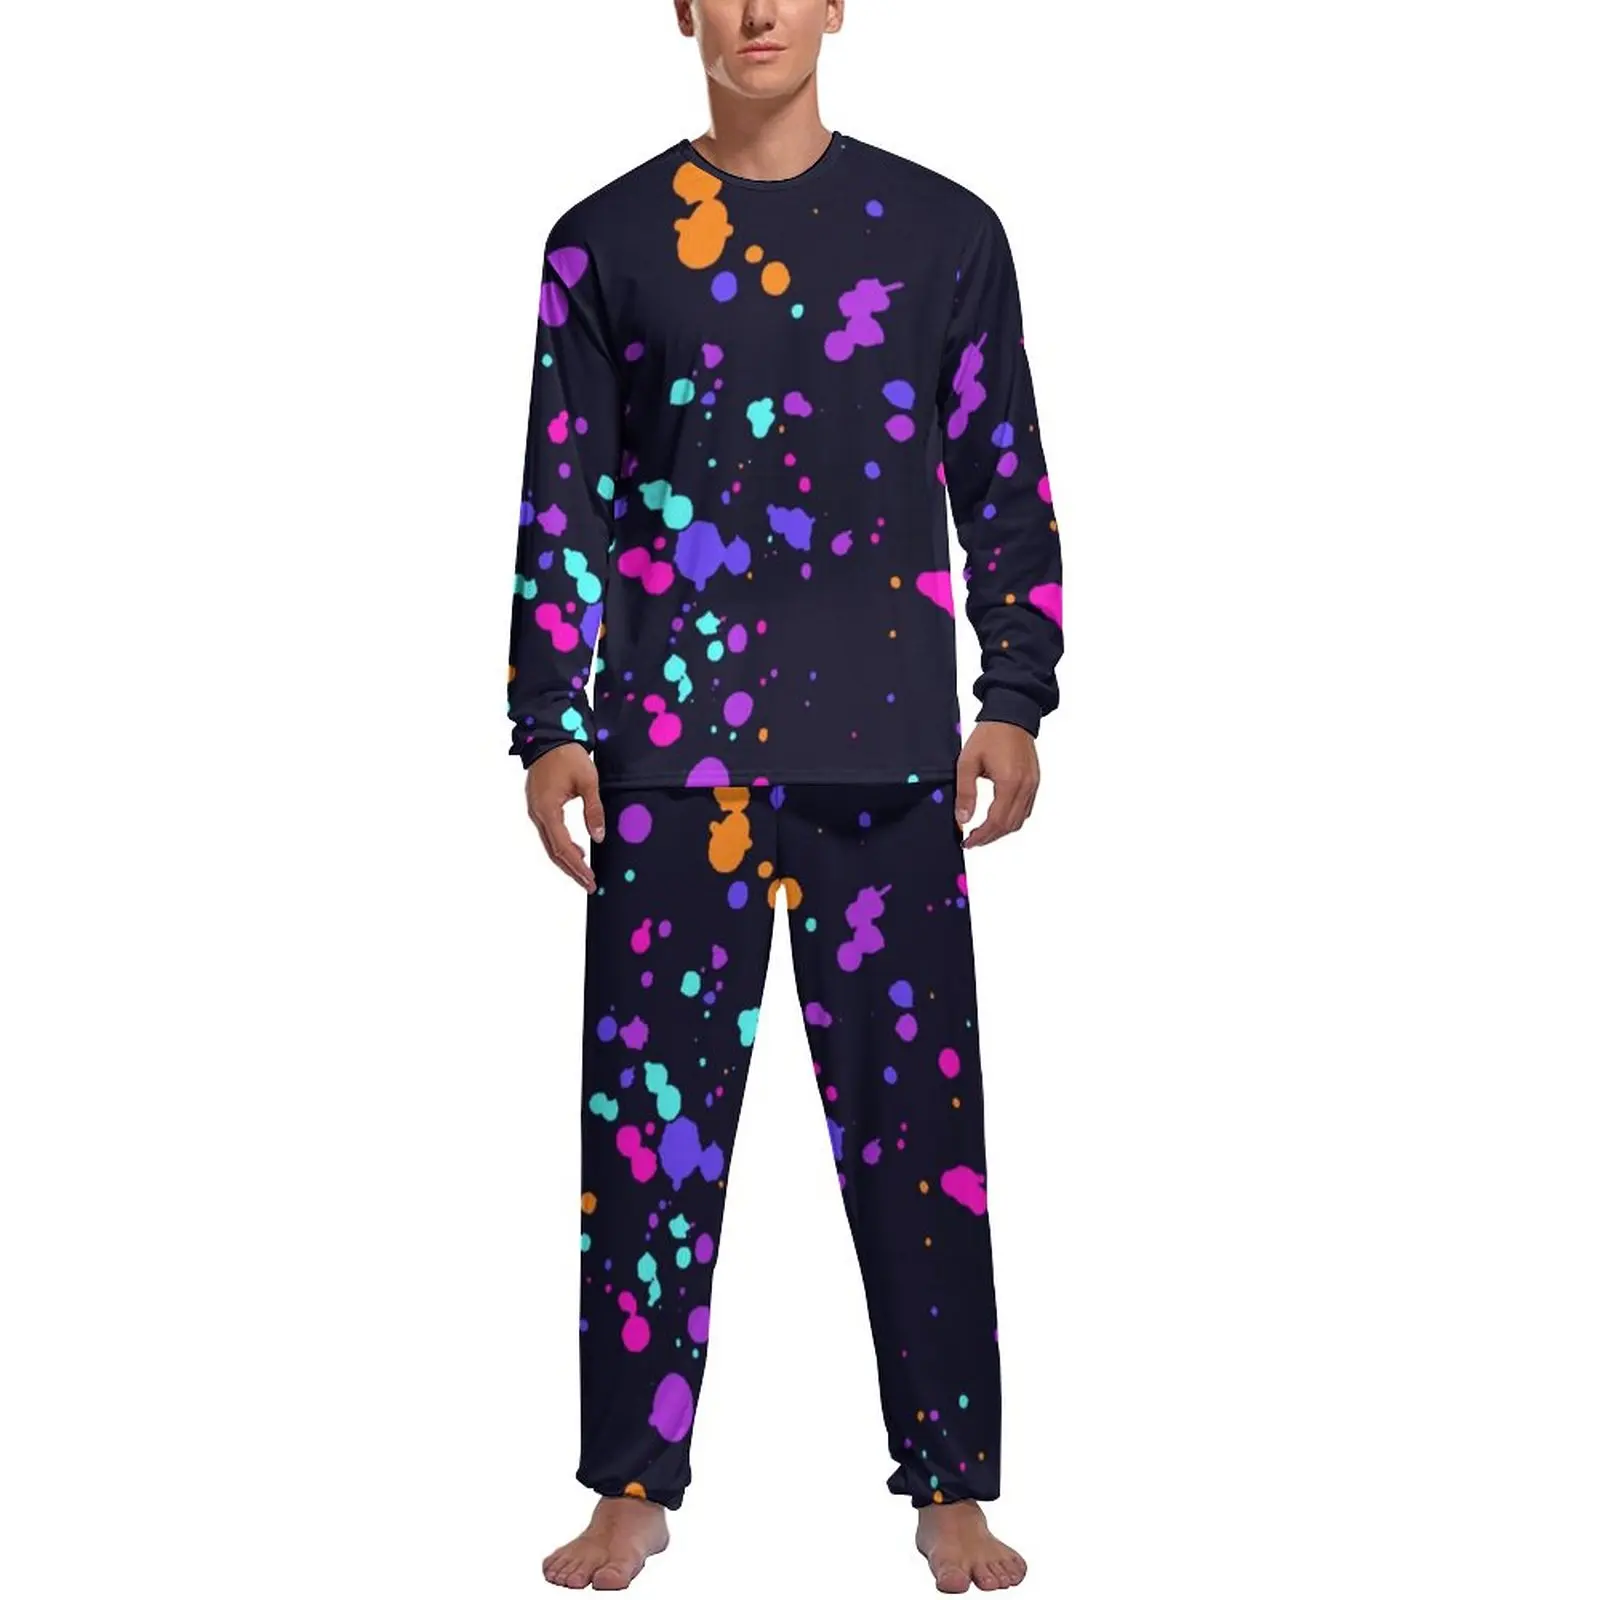 Colorful Splash Pajamas Long-Sleeve Trippy Print 2 Piece Home Pajama Sets Daily Male Graphic Kawaii Sleepwear